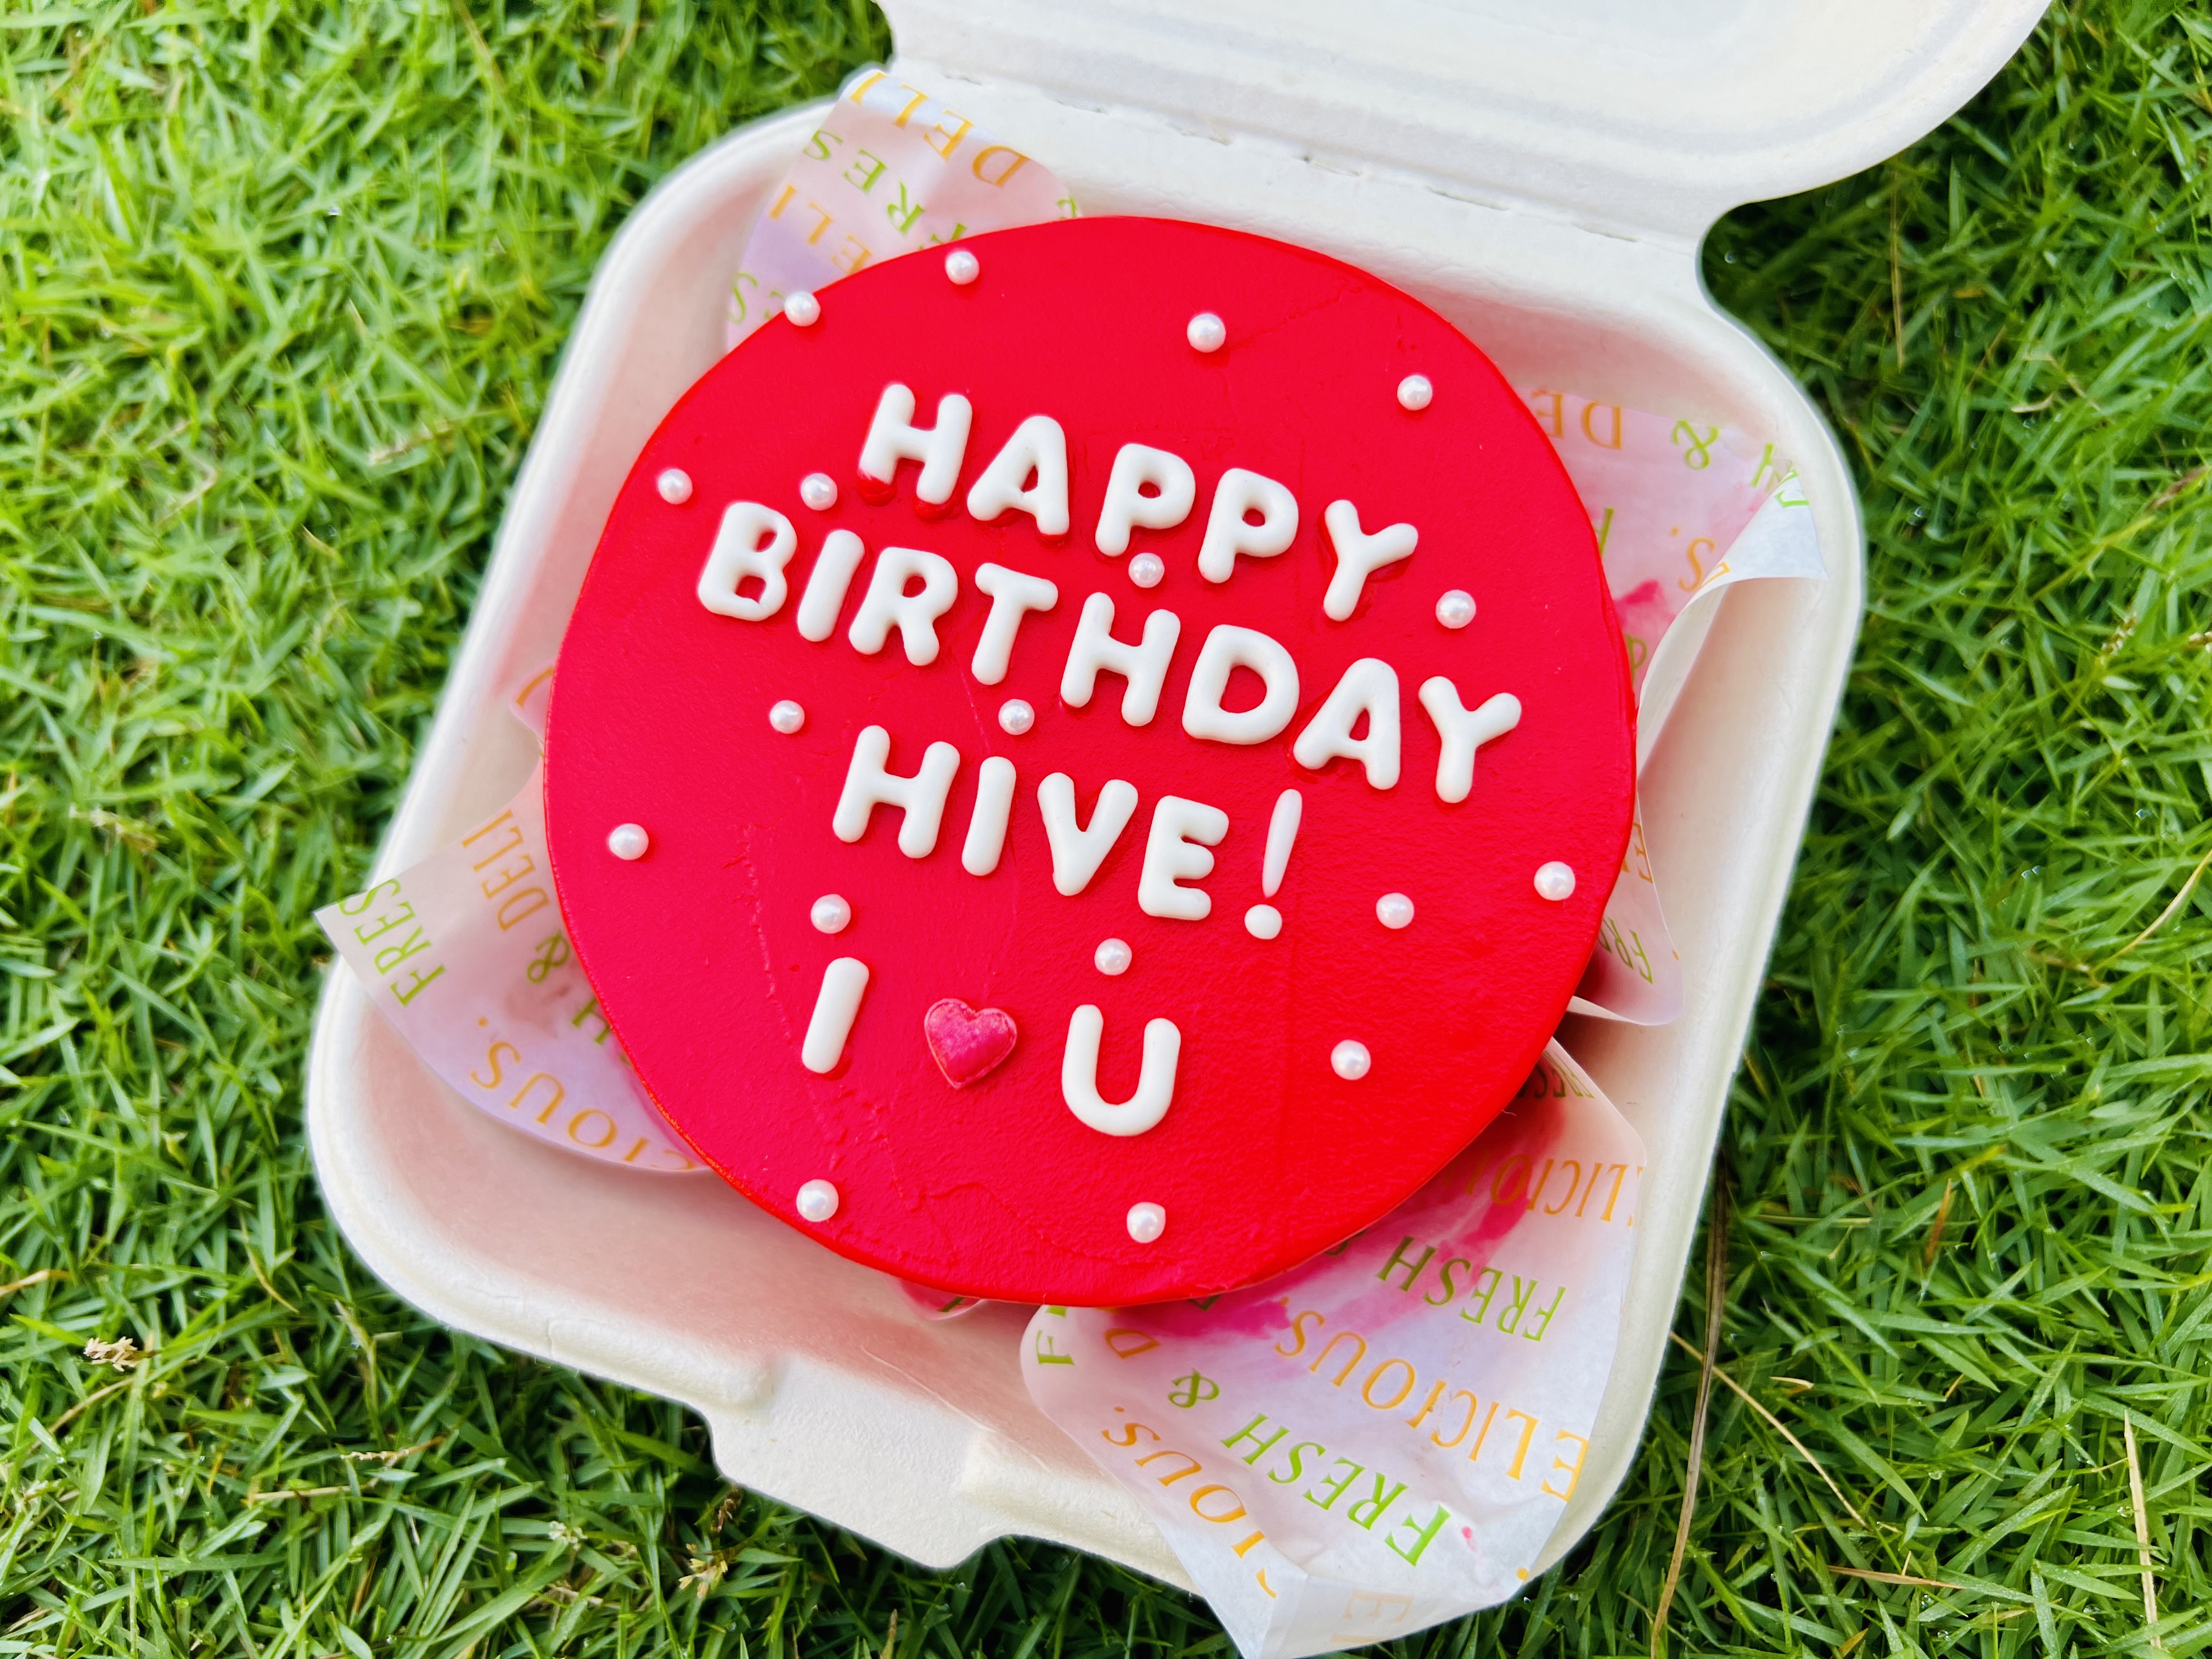 @pinkchic/happy-birthday-hive-i-love